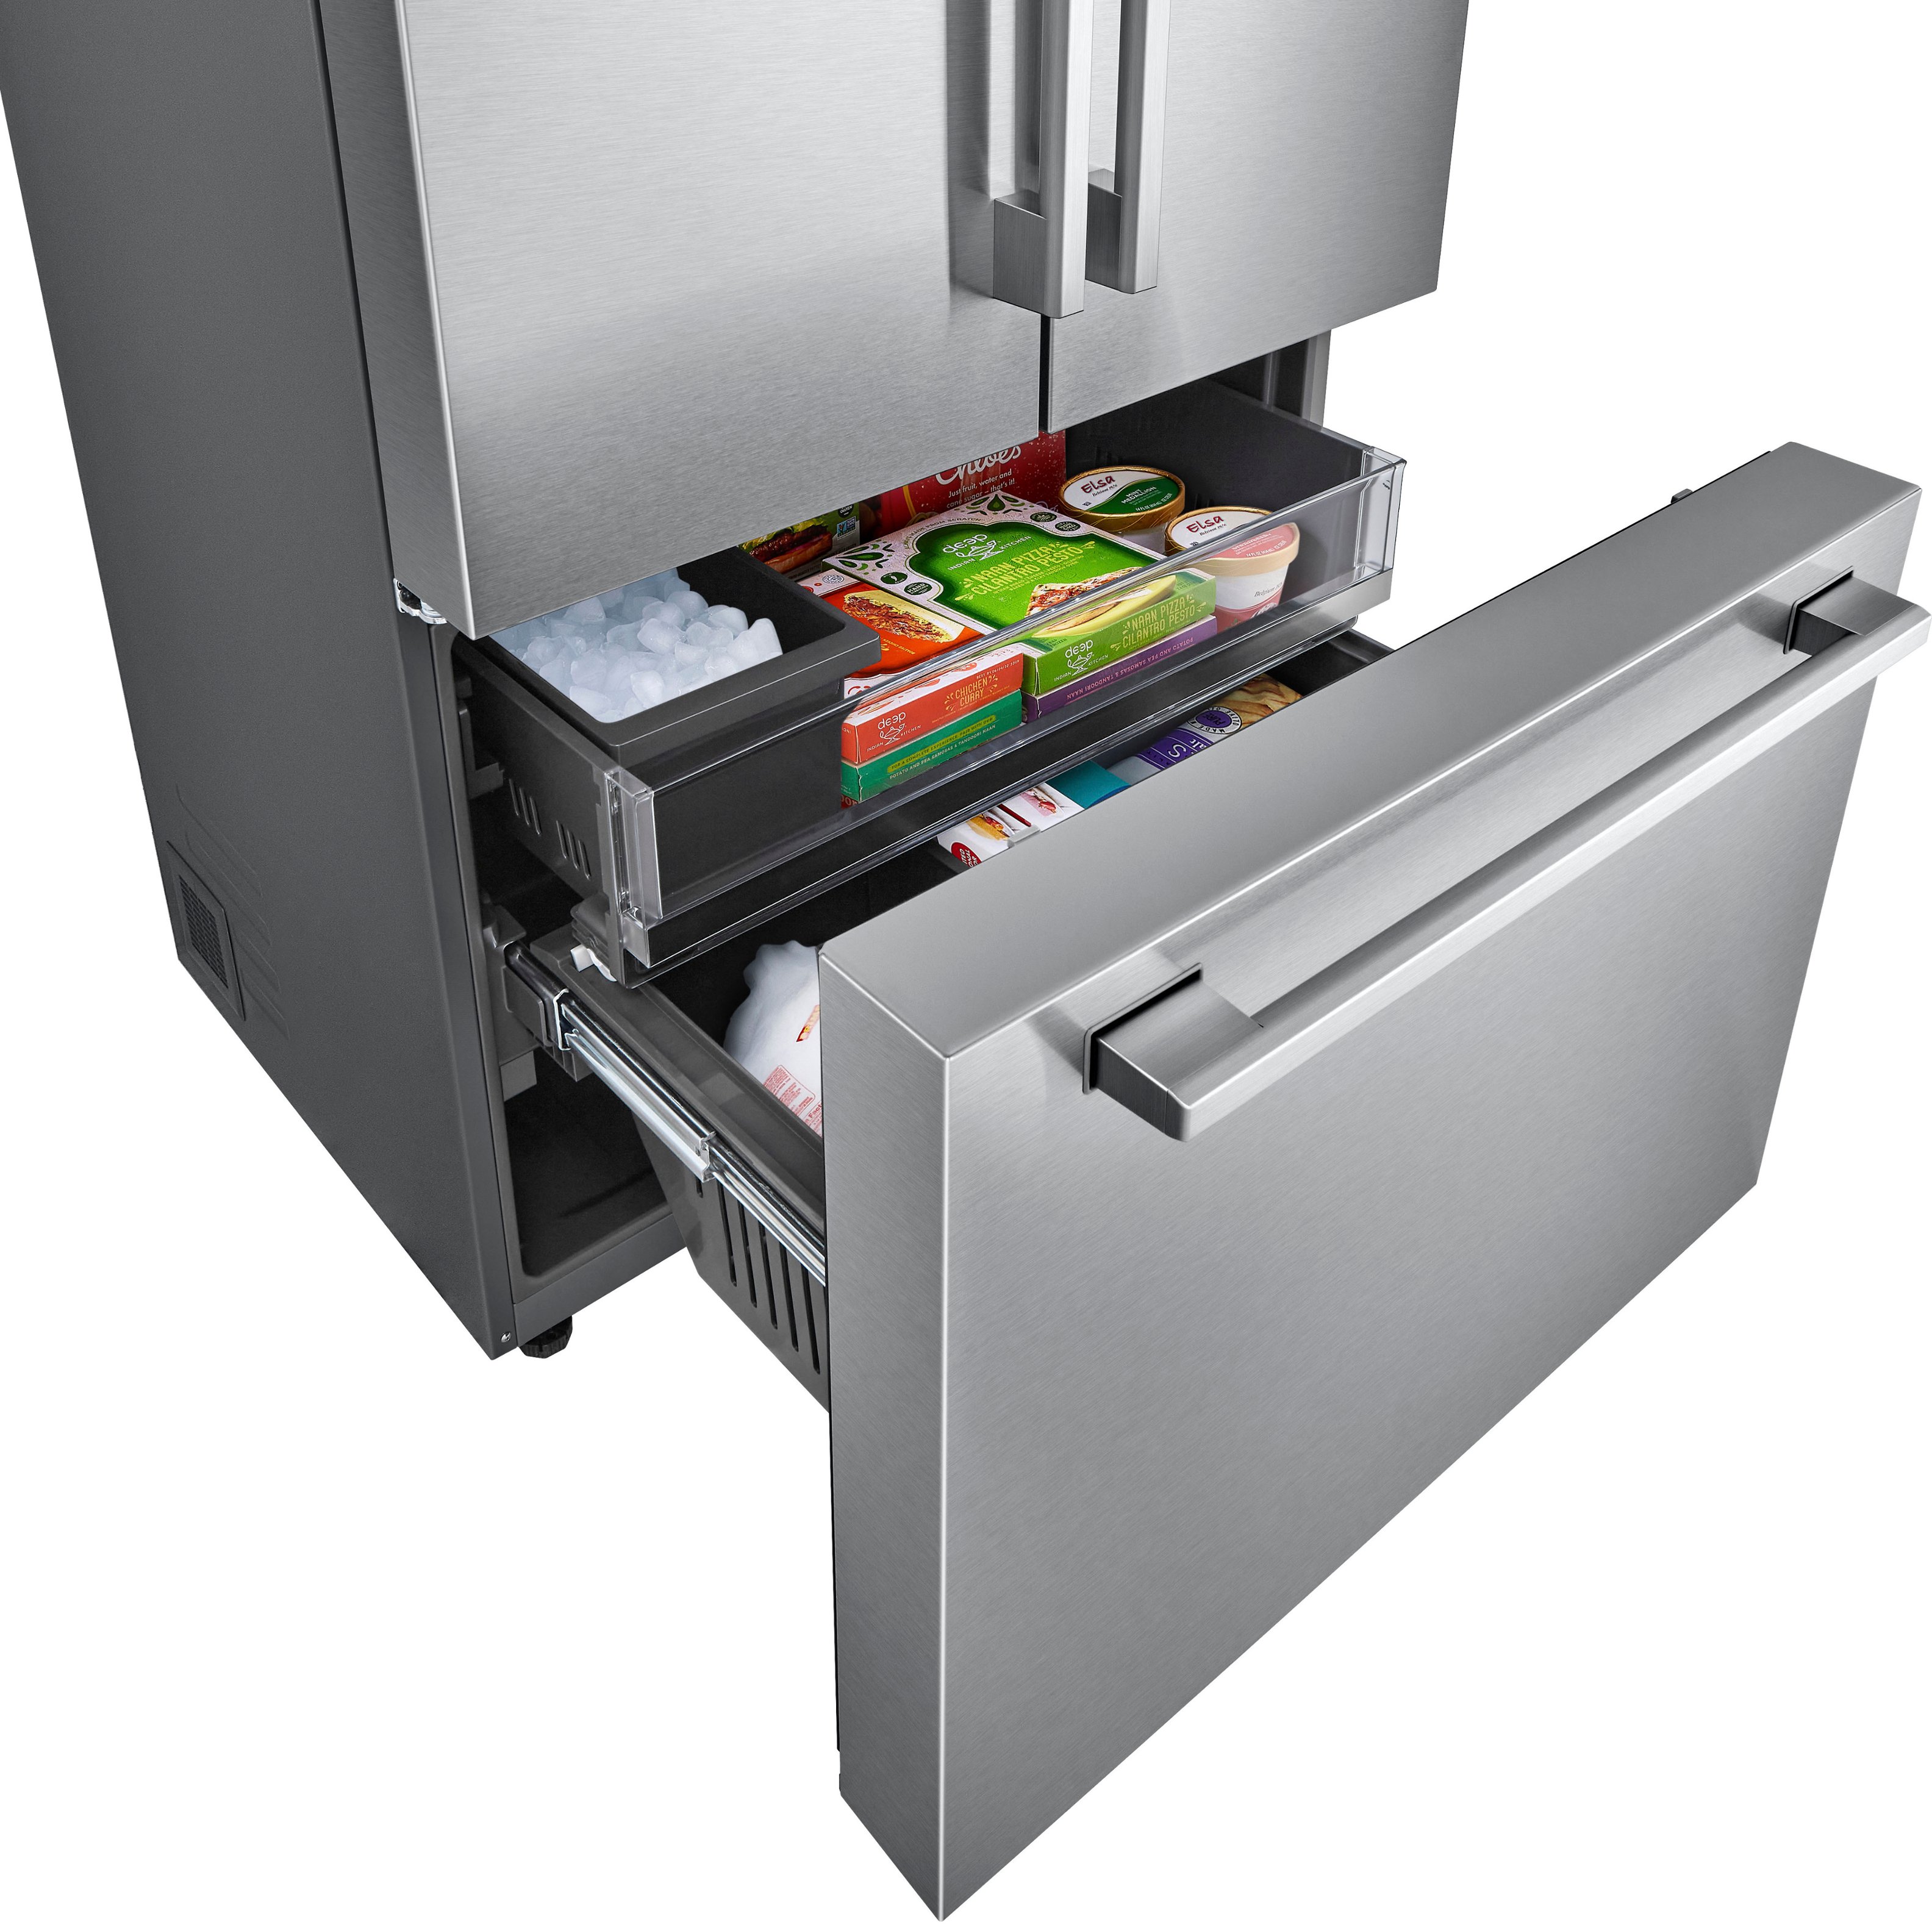 LG GBB530NSCFE fridge freezer Review